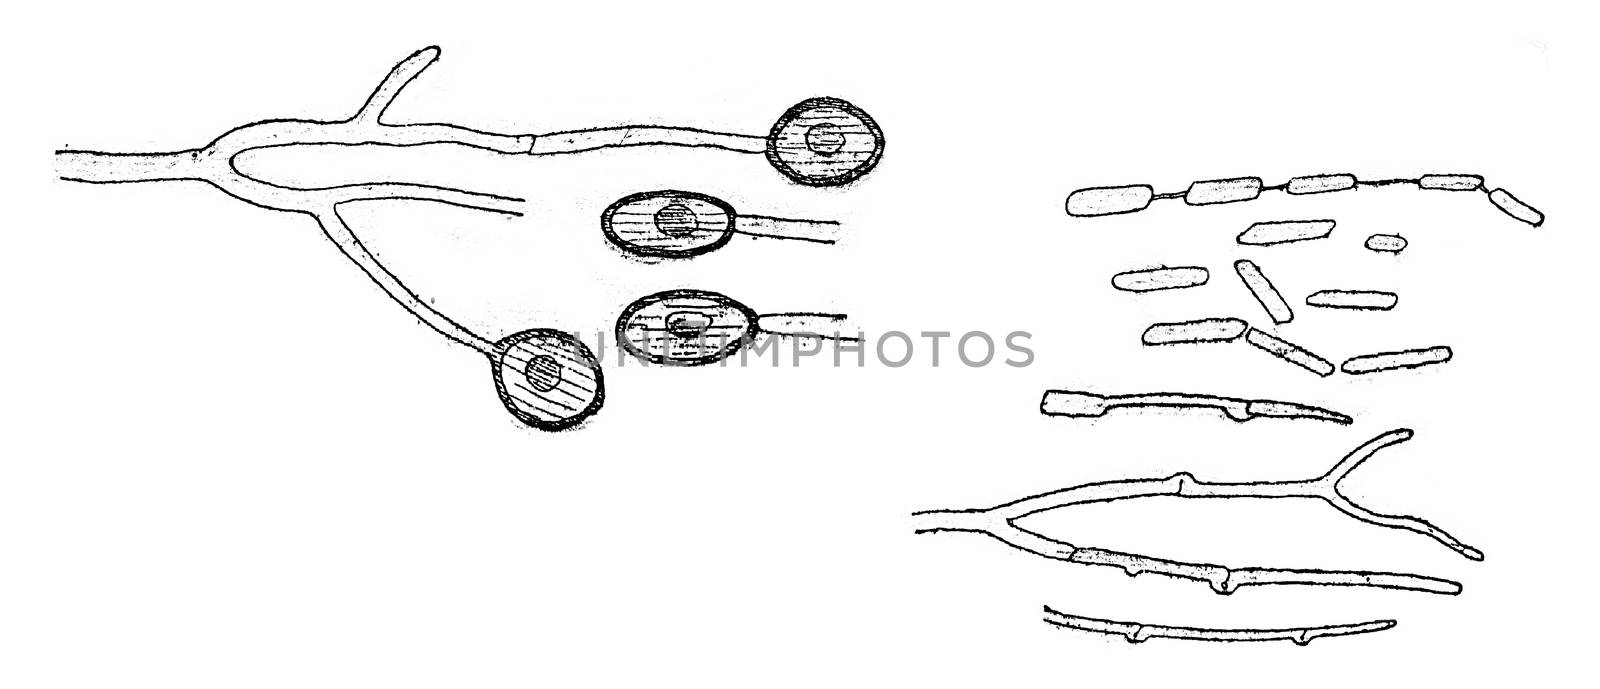 Conidia form, Chlamydospores and germination, vintage engraved illustration.
